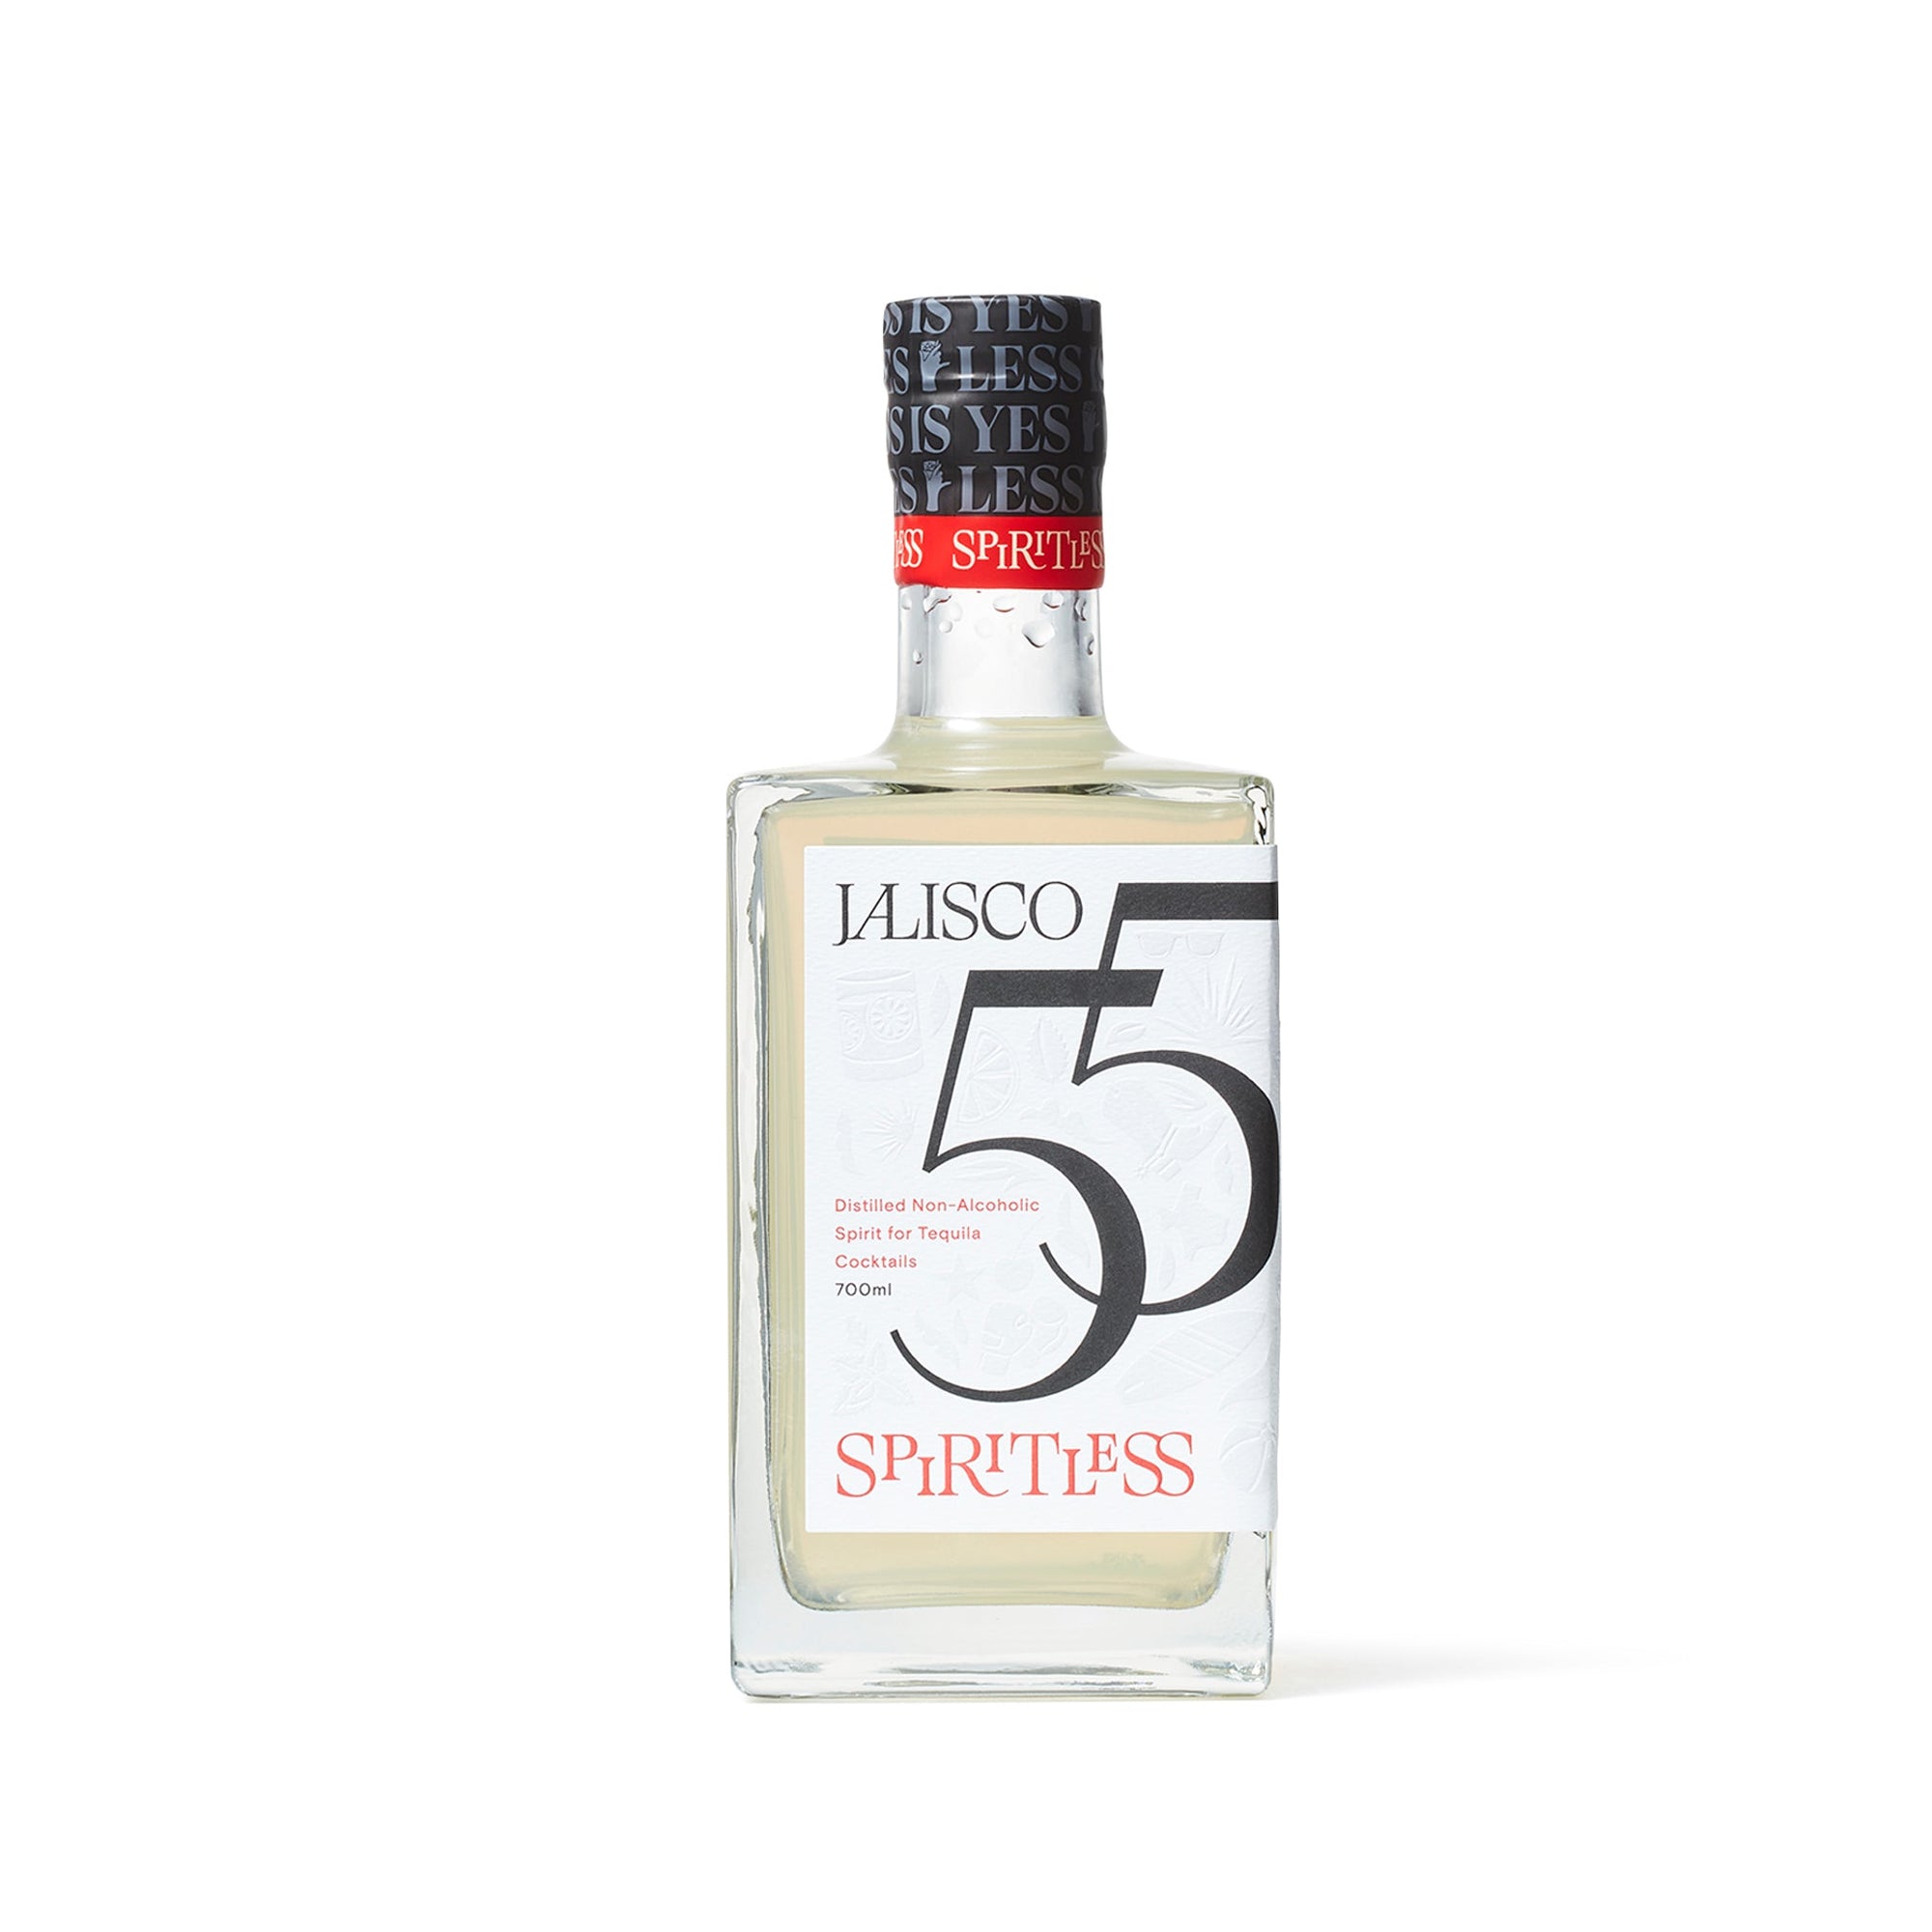 Spiritless - Jalisco 55 - Non-Alcoholic Tequila - 700 ml - Boisson